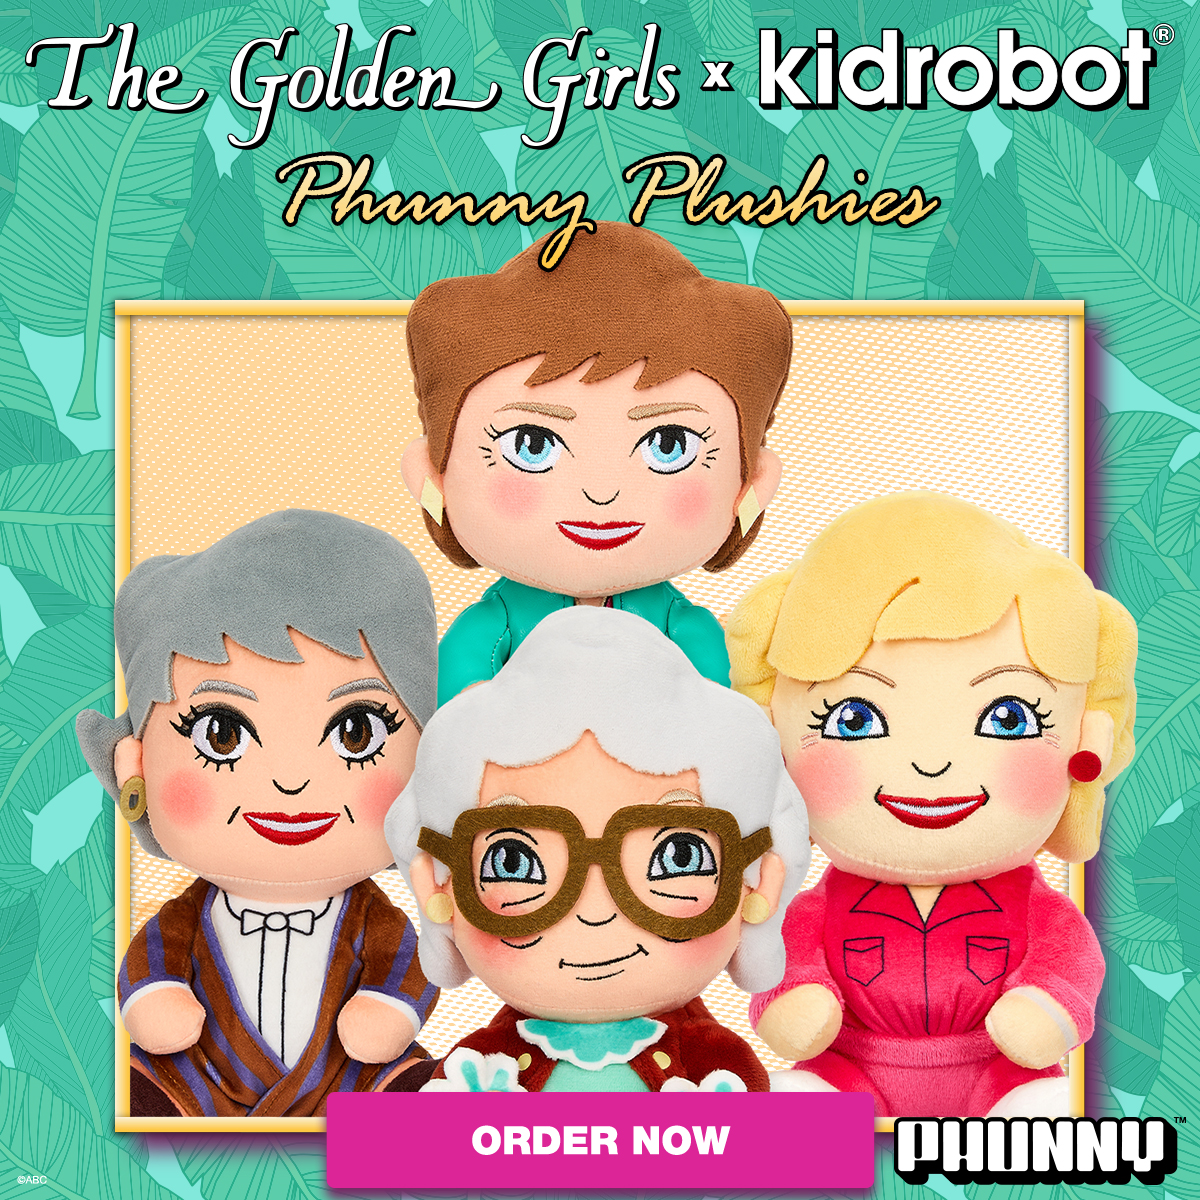 The Golden Girls x Kidrobot - Plush collectibles by Kidrobot